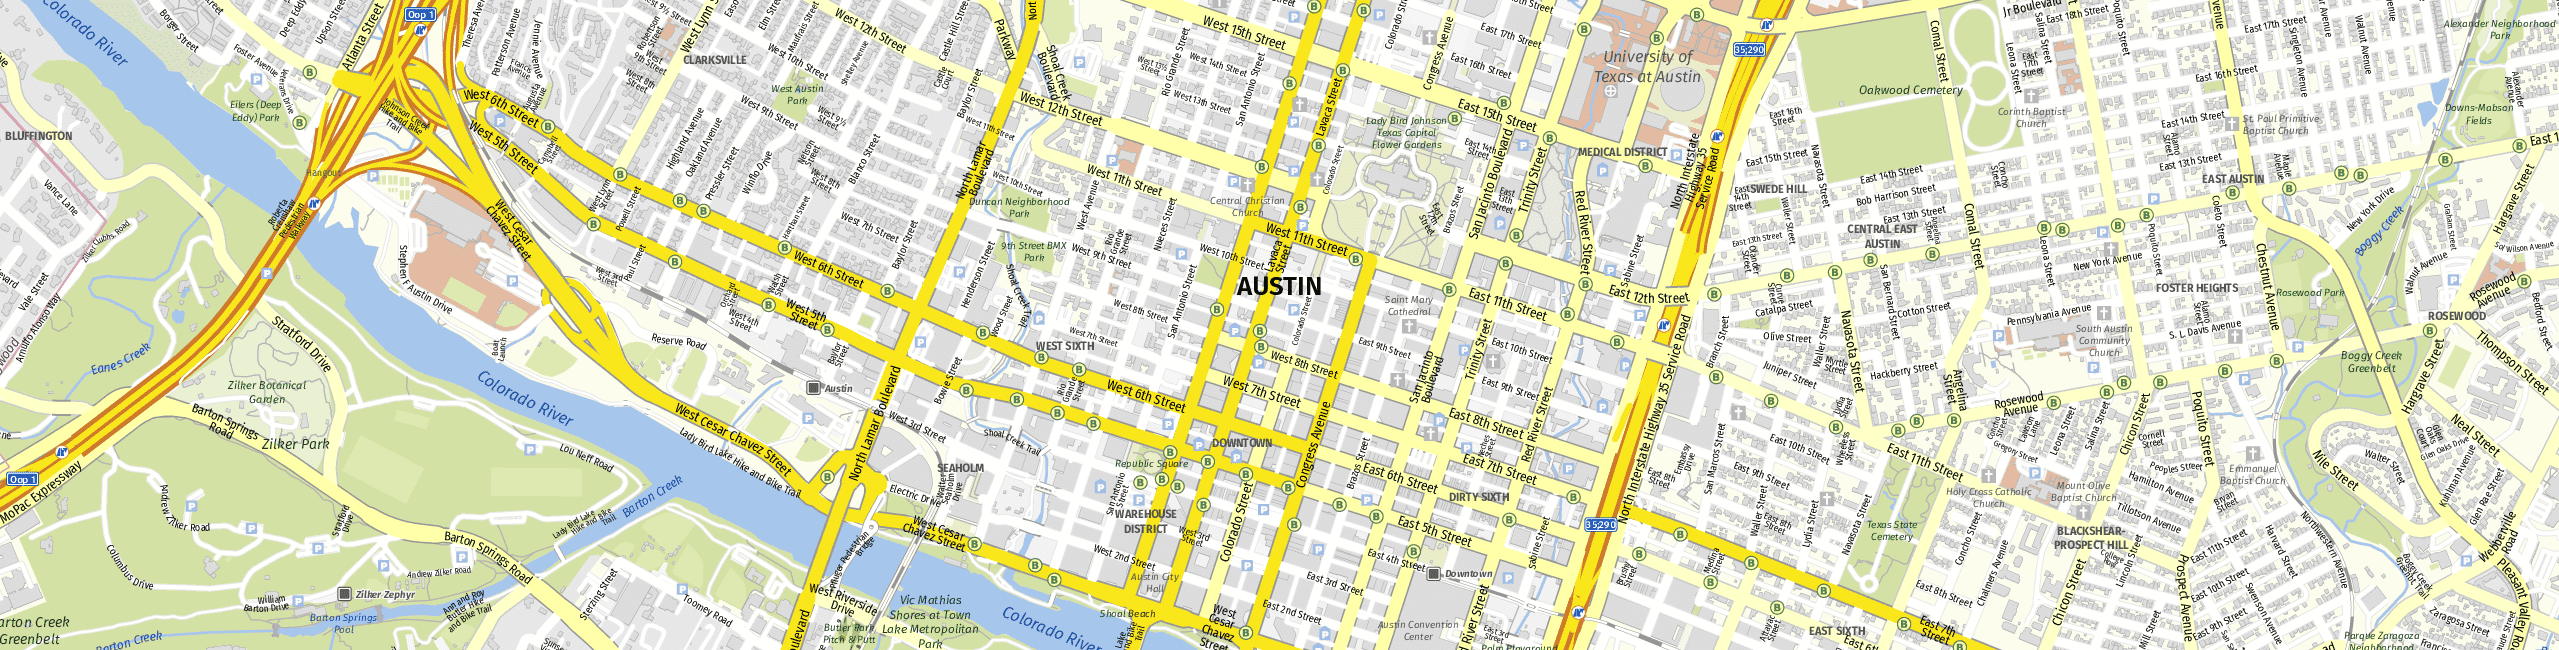 Stadtplan Austin zum Downloaden.